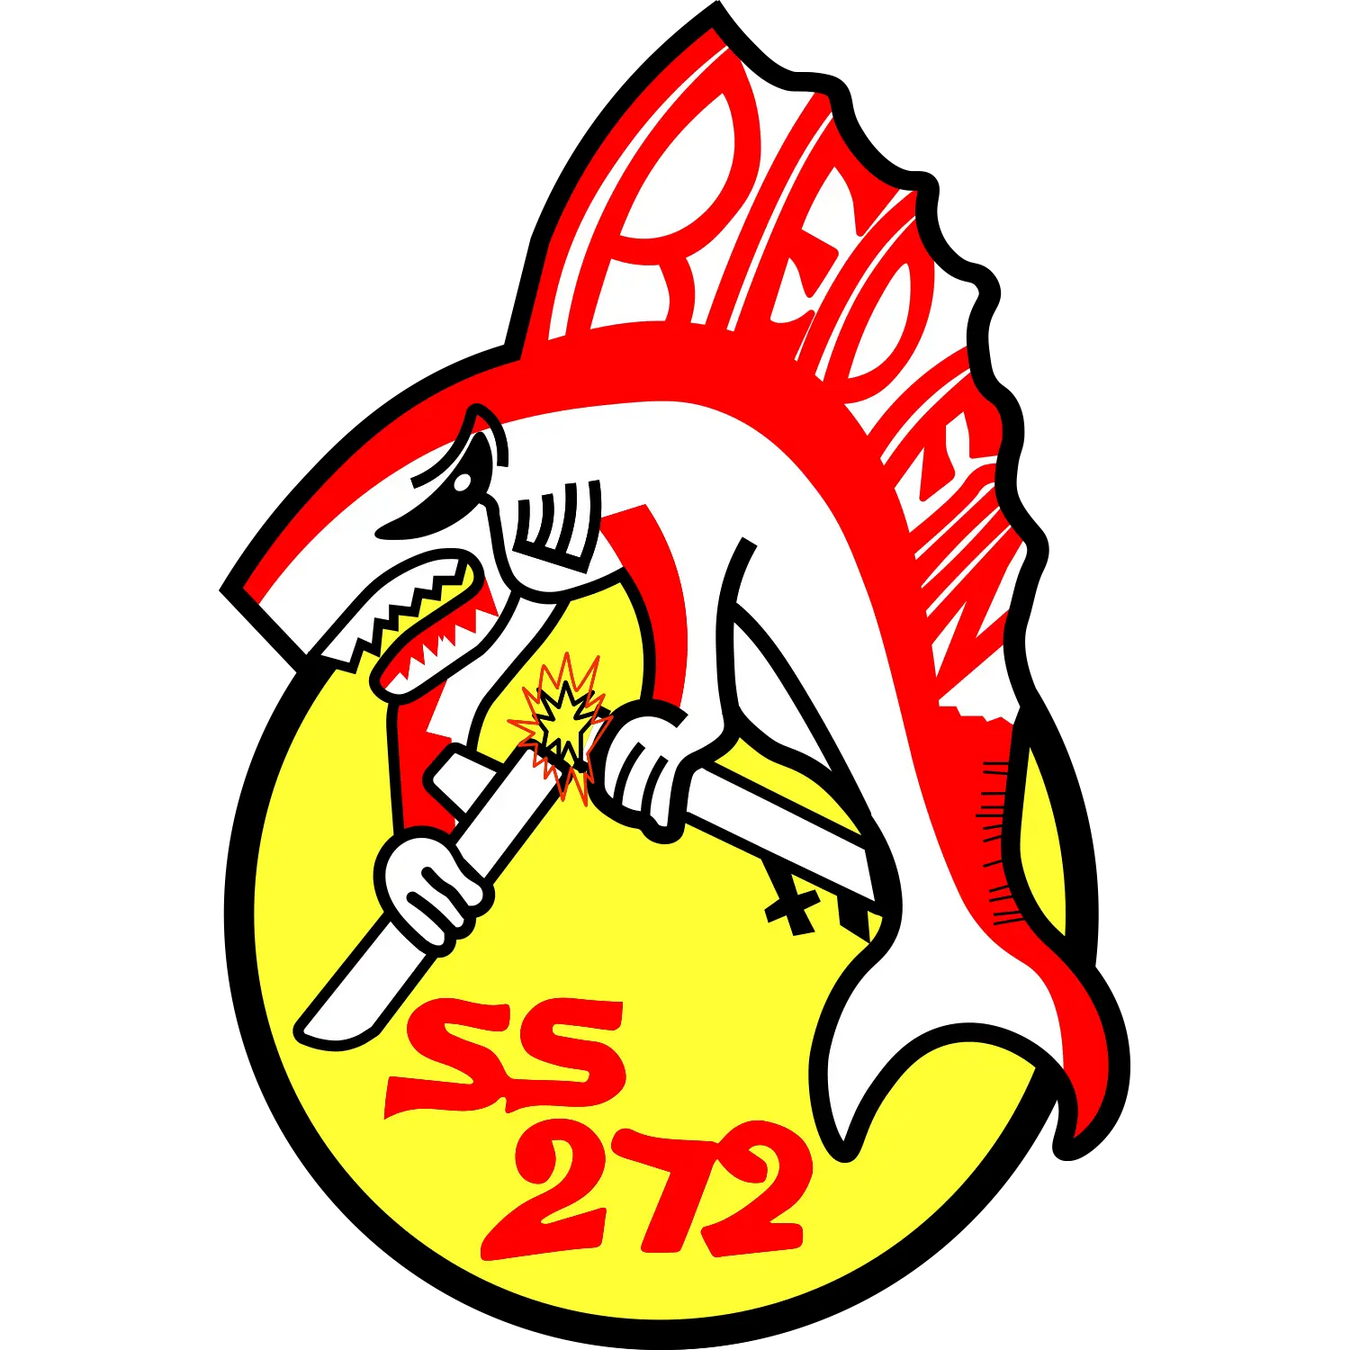 USS Redfin (SS-272) Gato-Class Submarine Logo Decal Emblem Crest Patch Insignia